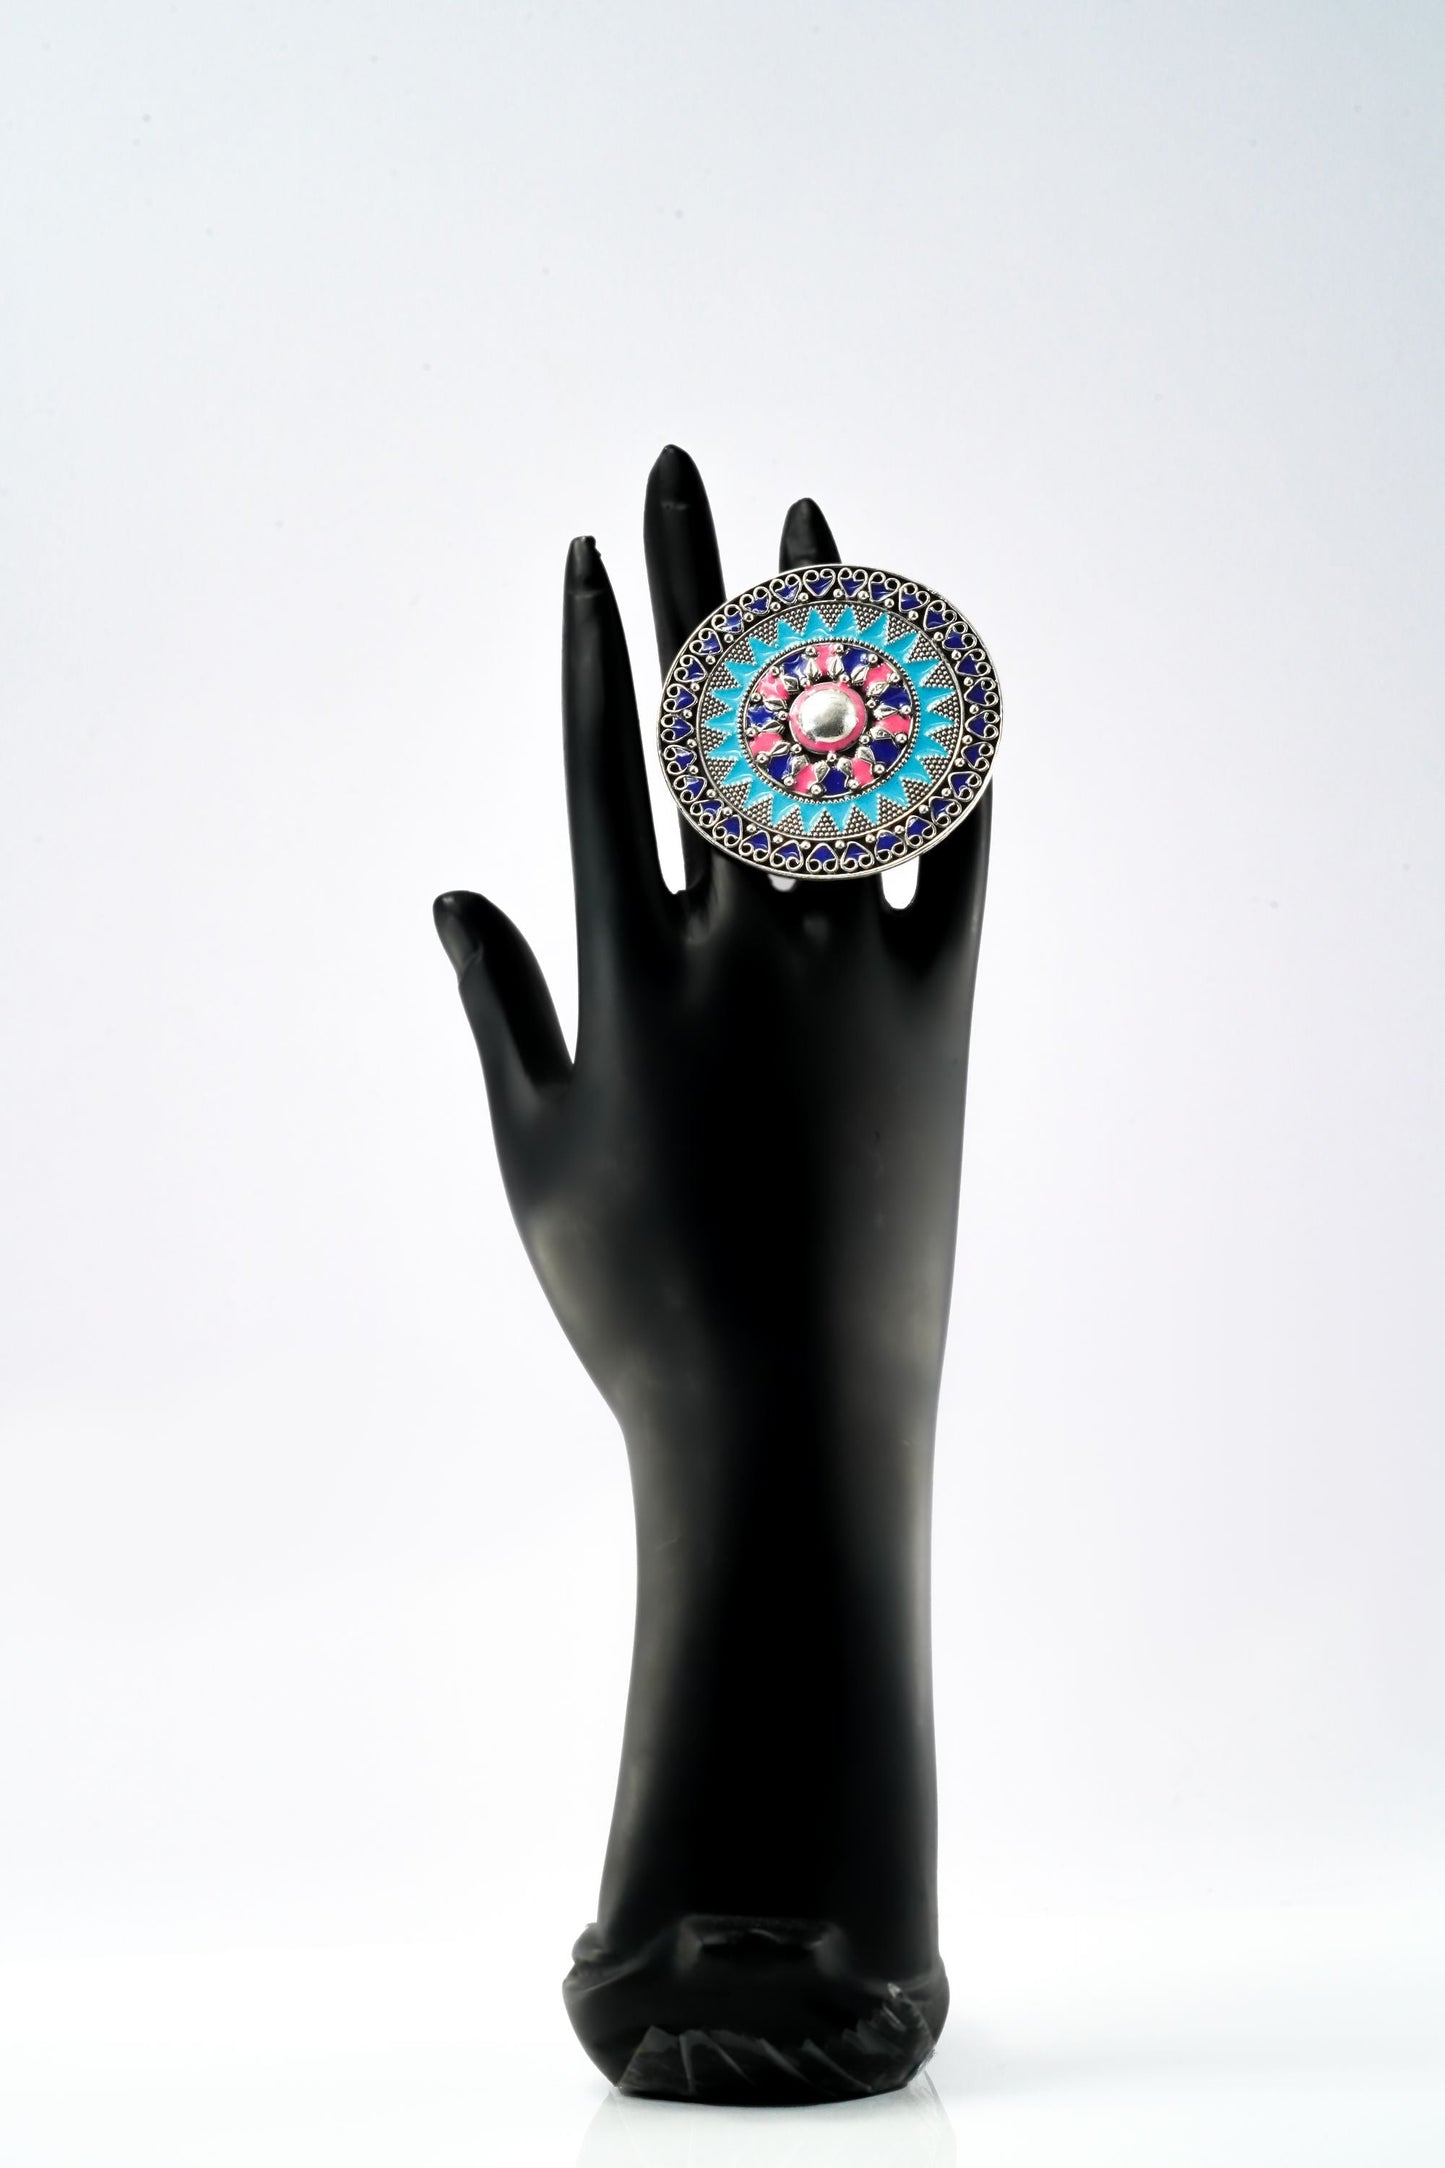 Blue and Pink Meenakari Ring - Neeta Boochra Jewellery